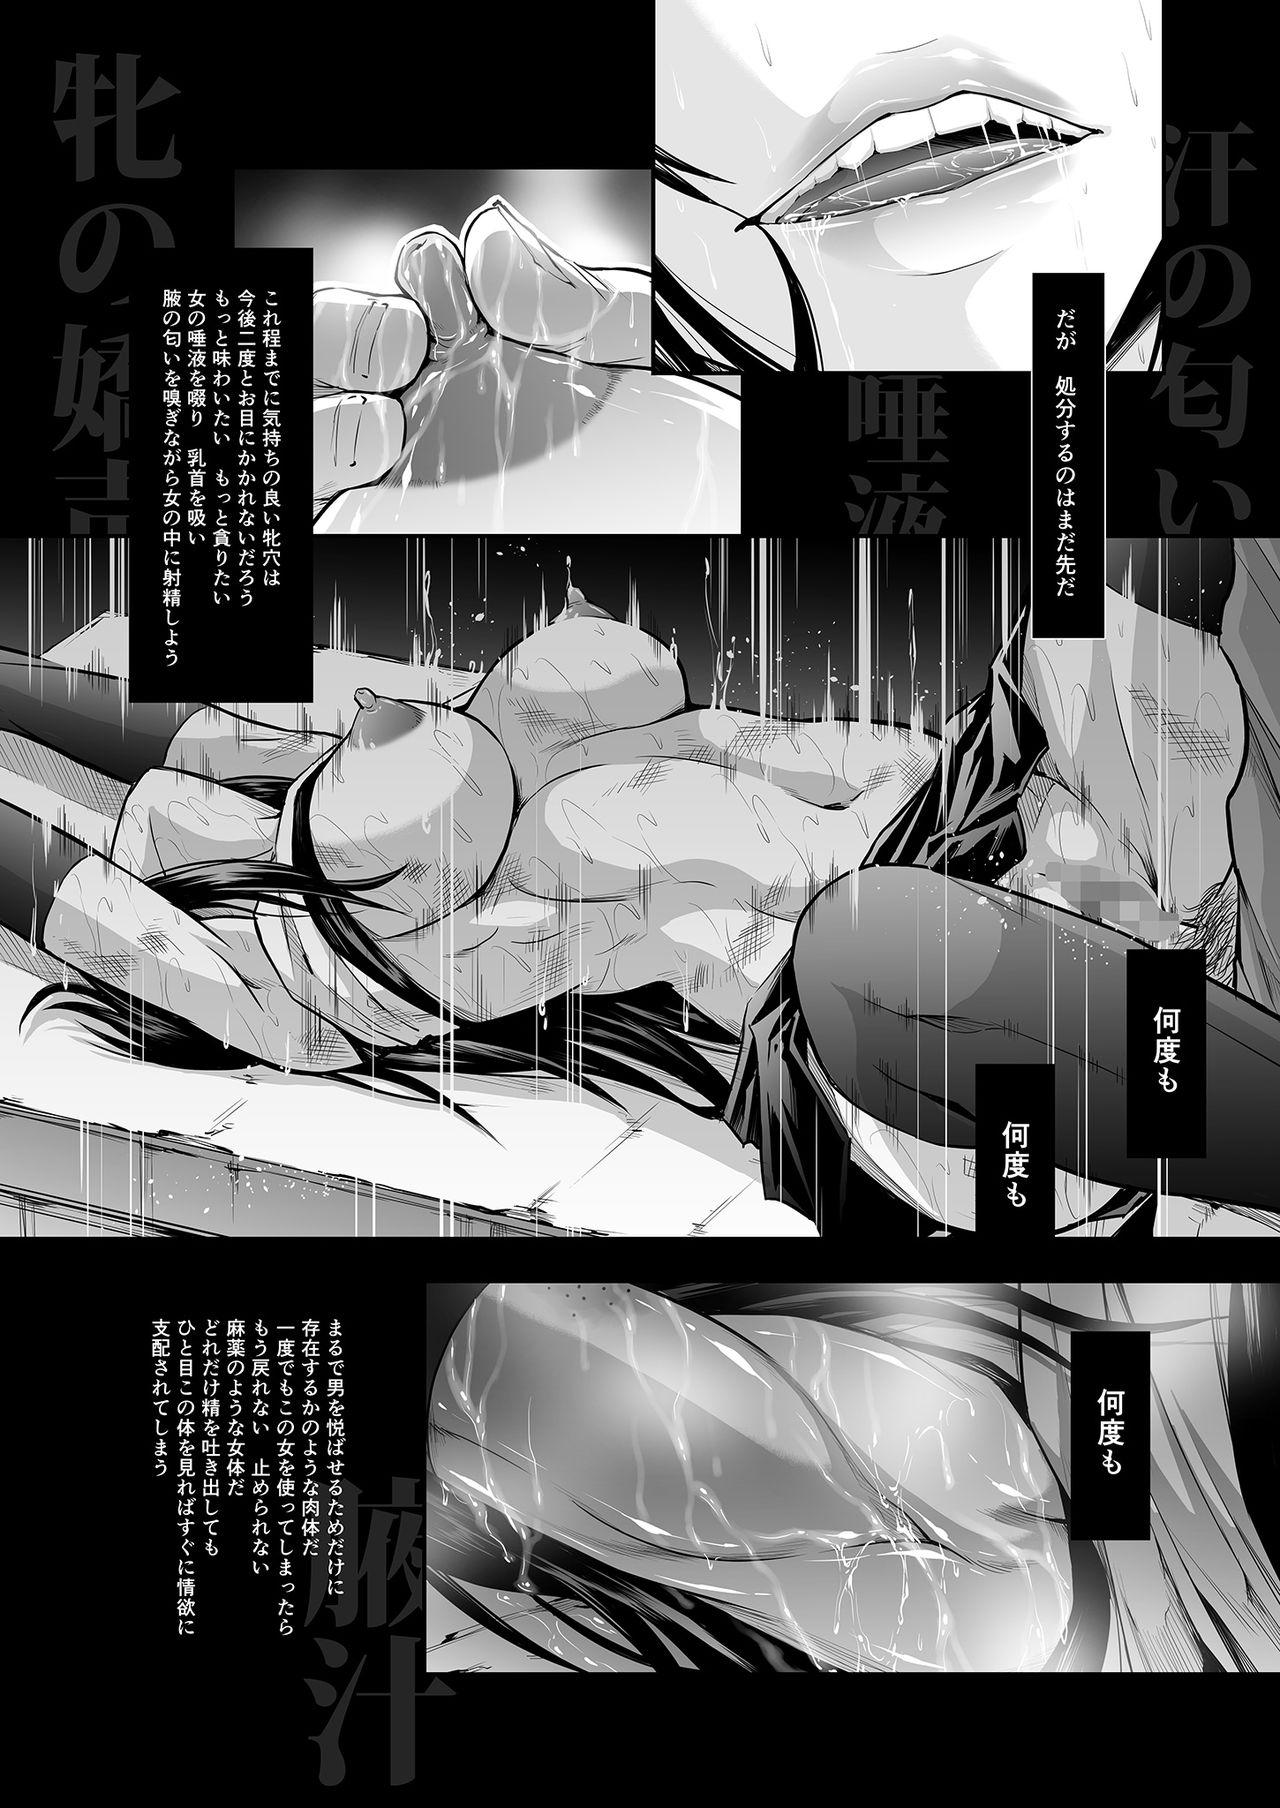 Stepsiblings Zappitsu Light - Final fantasy vii The onechanbara Pervert - Page 8